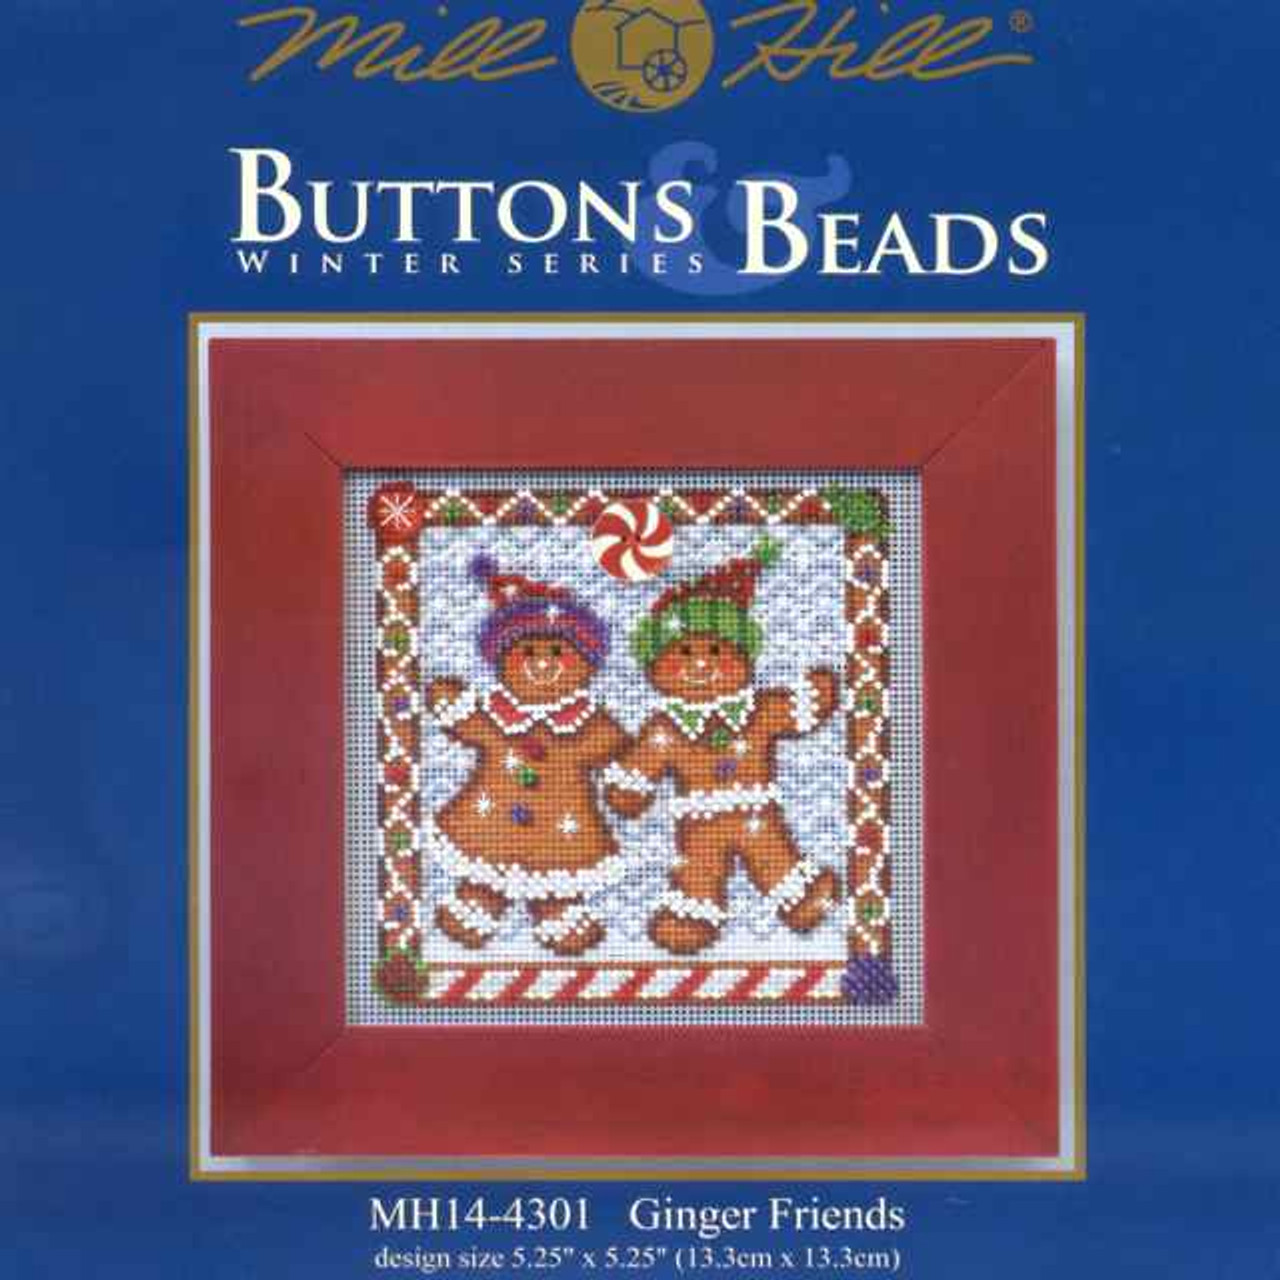 Ginger Friends Cross Stitch Kit Mill Hill 2014 Buttons & Beads Winter